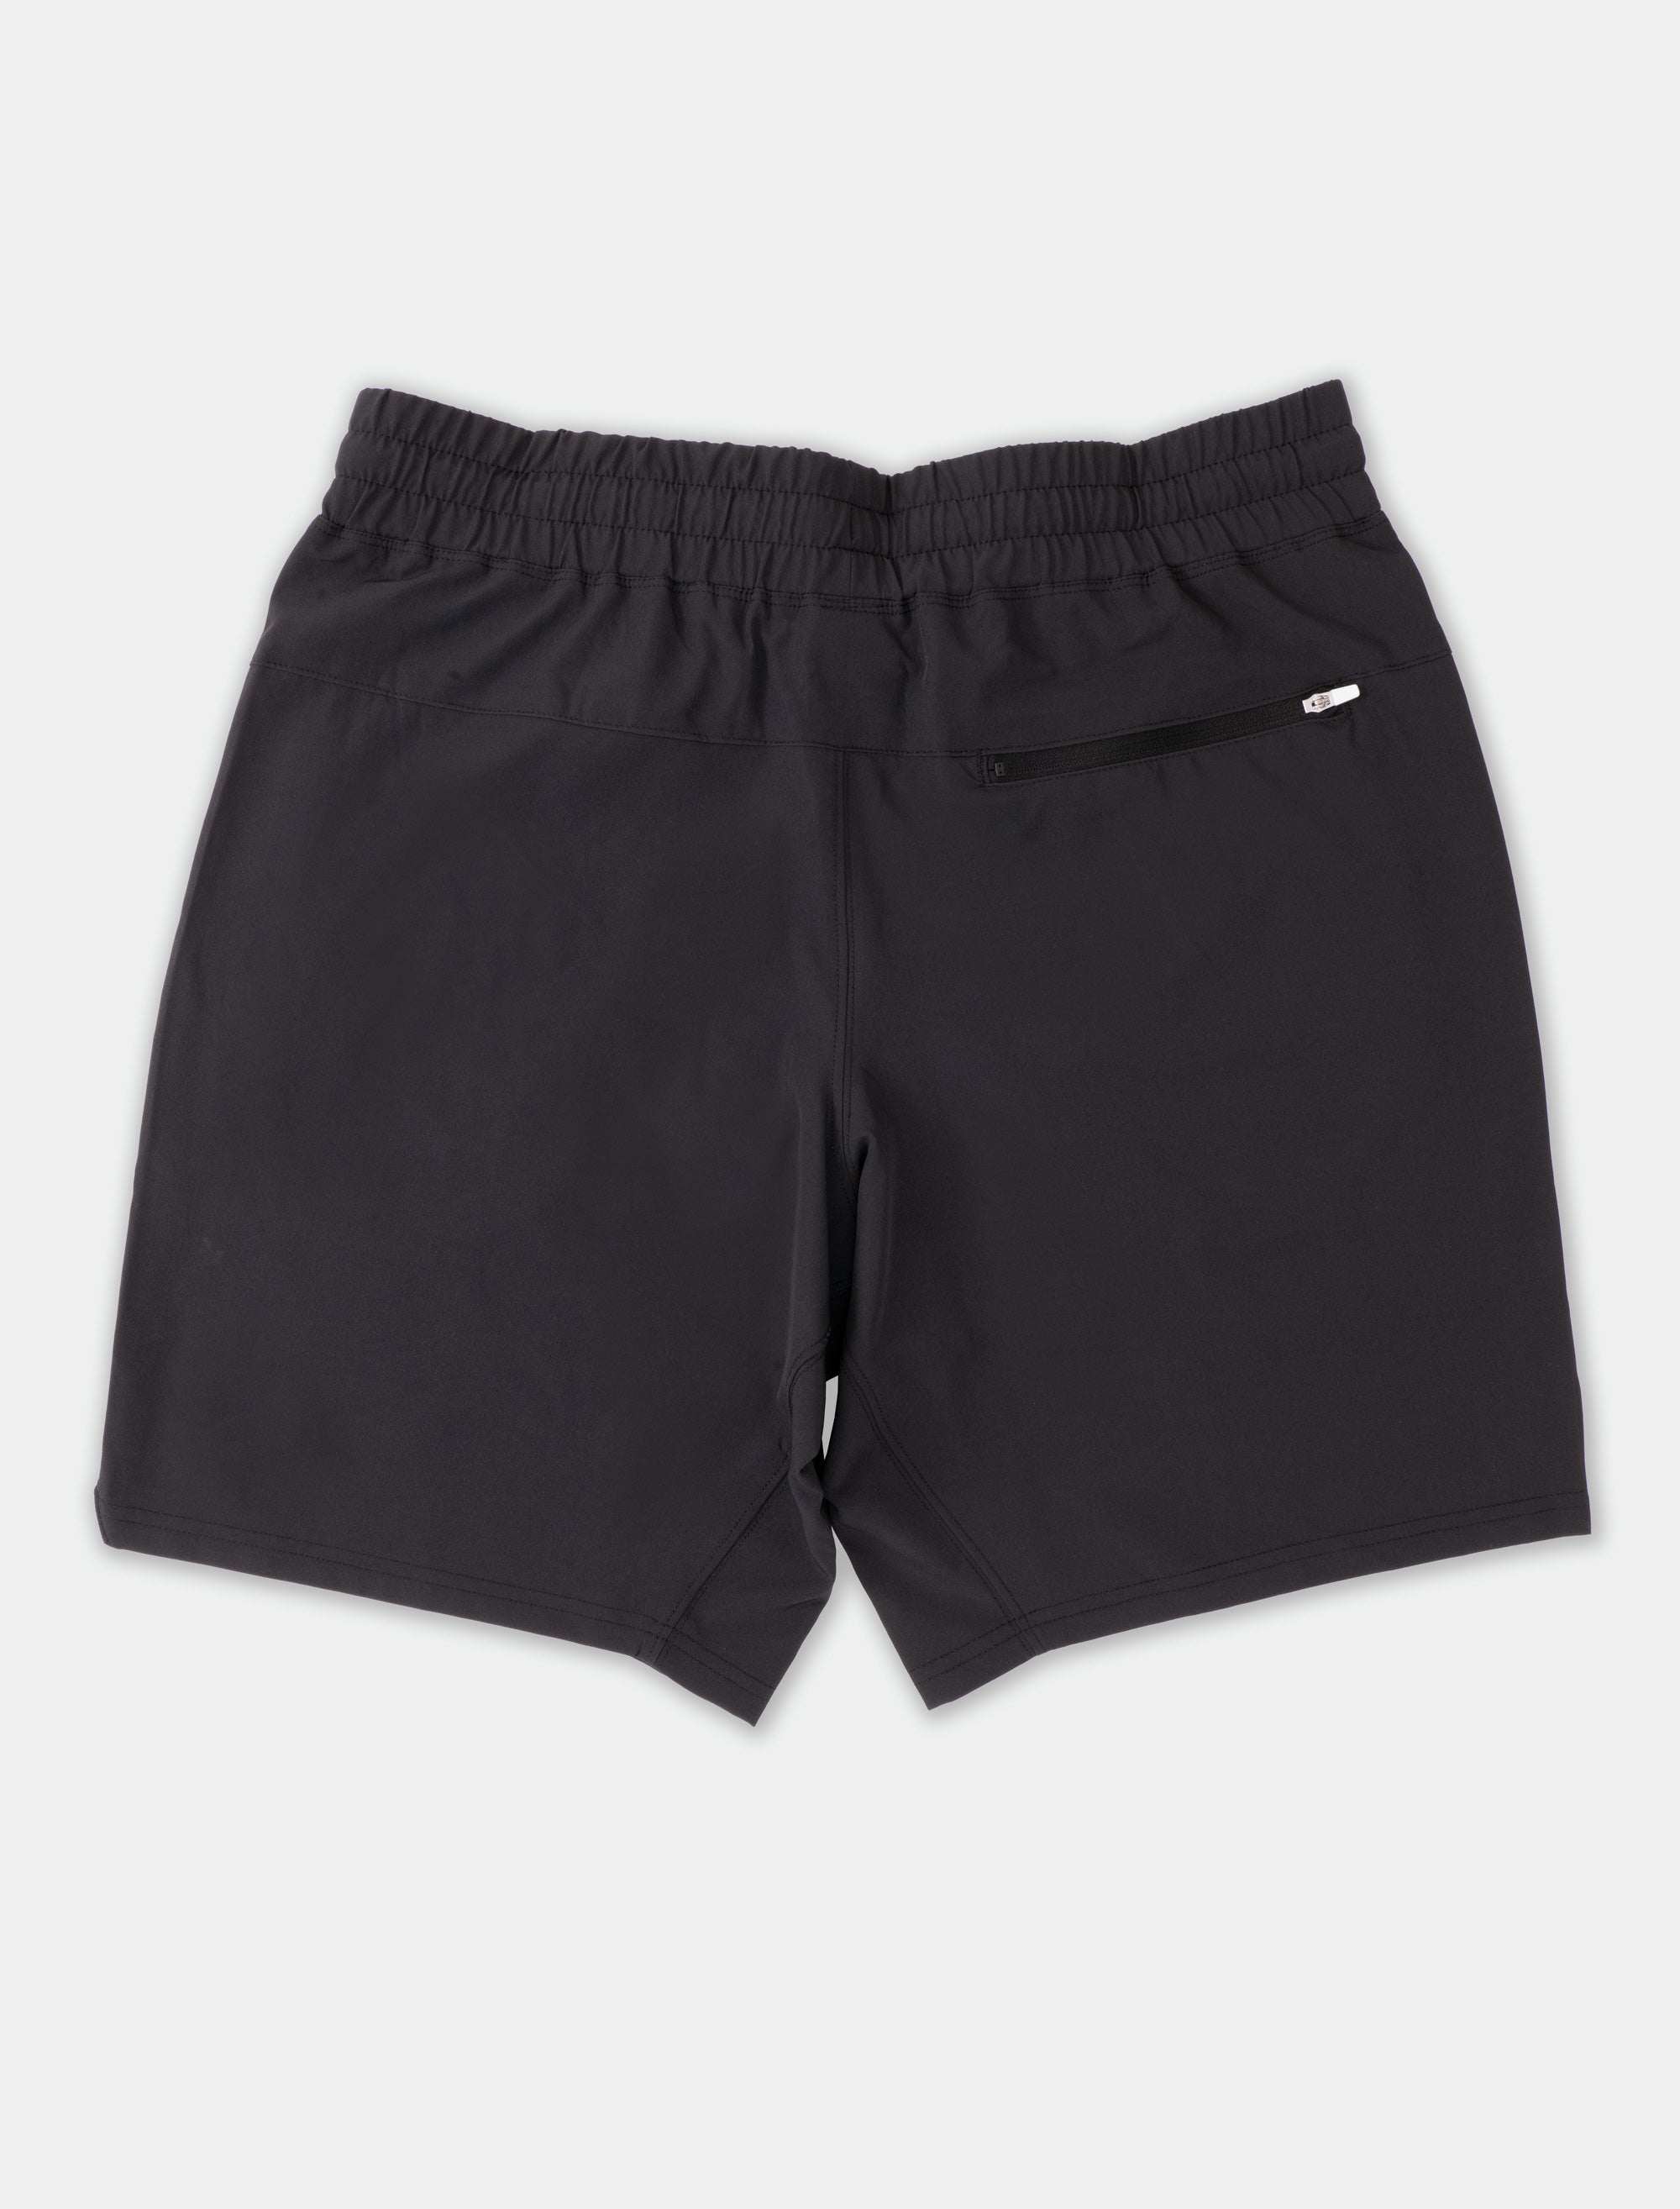 Mens-9in-Performance-shorts-black-back-greyBBCOM6360105BBCOM6360106BBCOM6360107BBCOM6360108BBCOM6380806BBCOM6380807BBCOM6380808BBCOM6380809BBCOM6380810